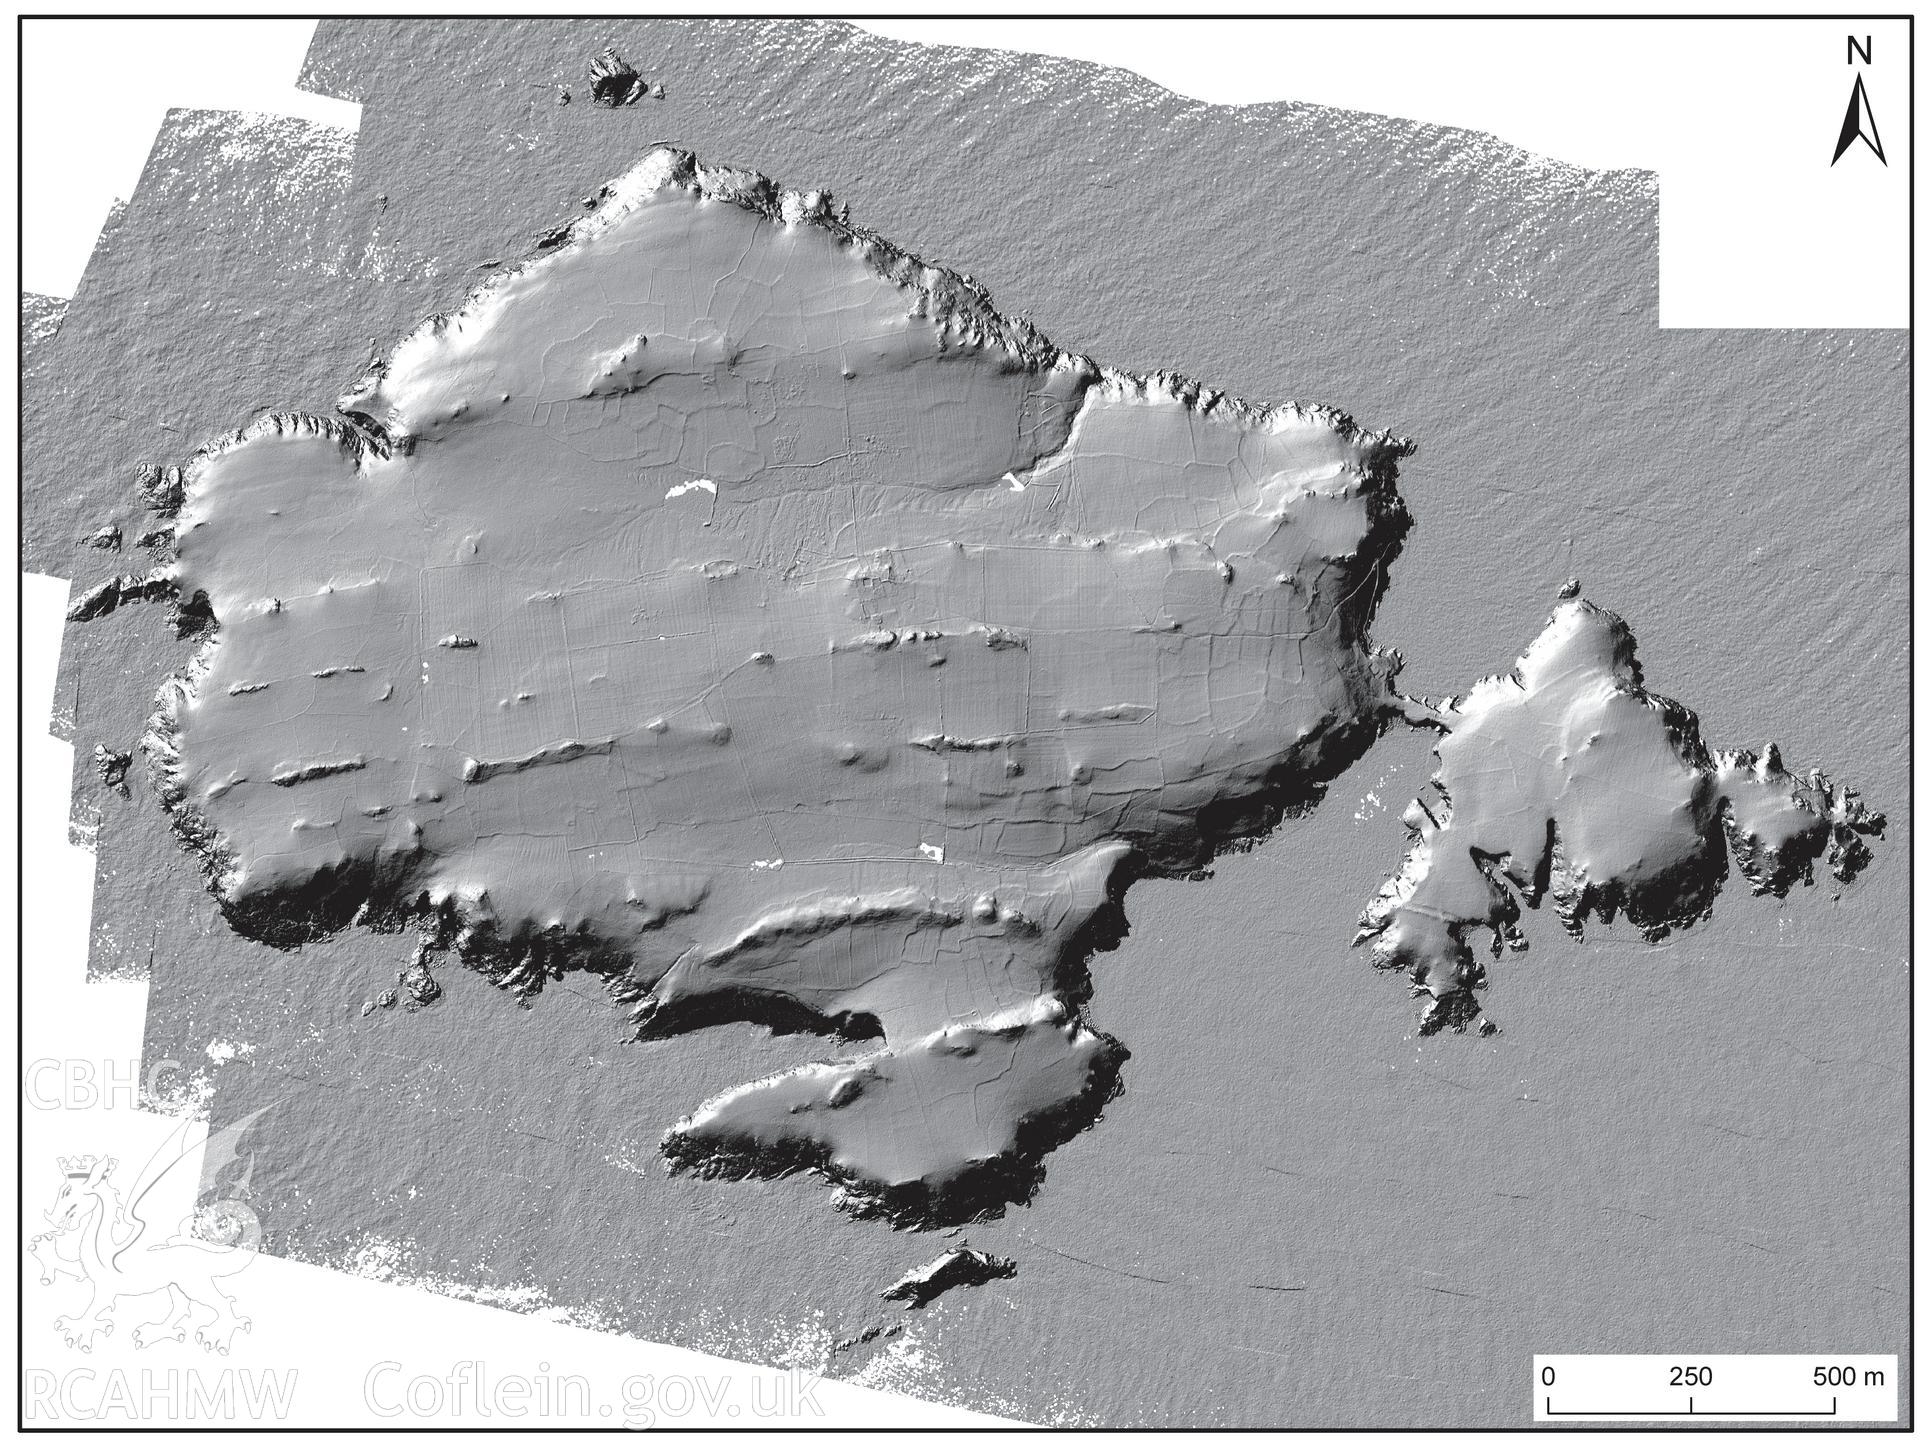 2D Lidar digital terrain model of Skomer Island.